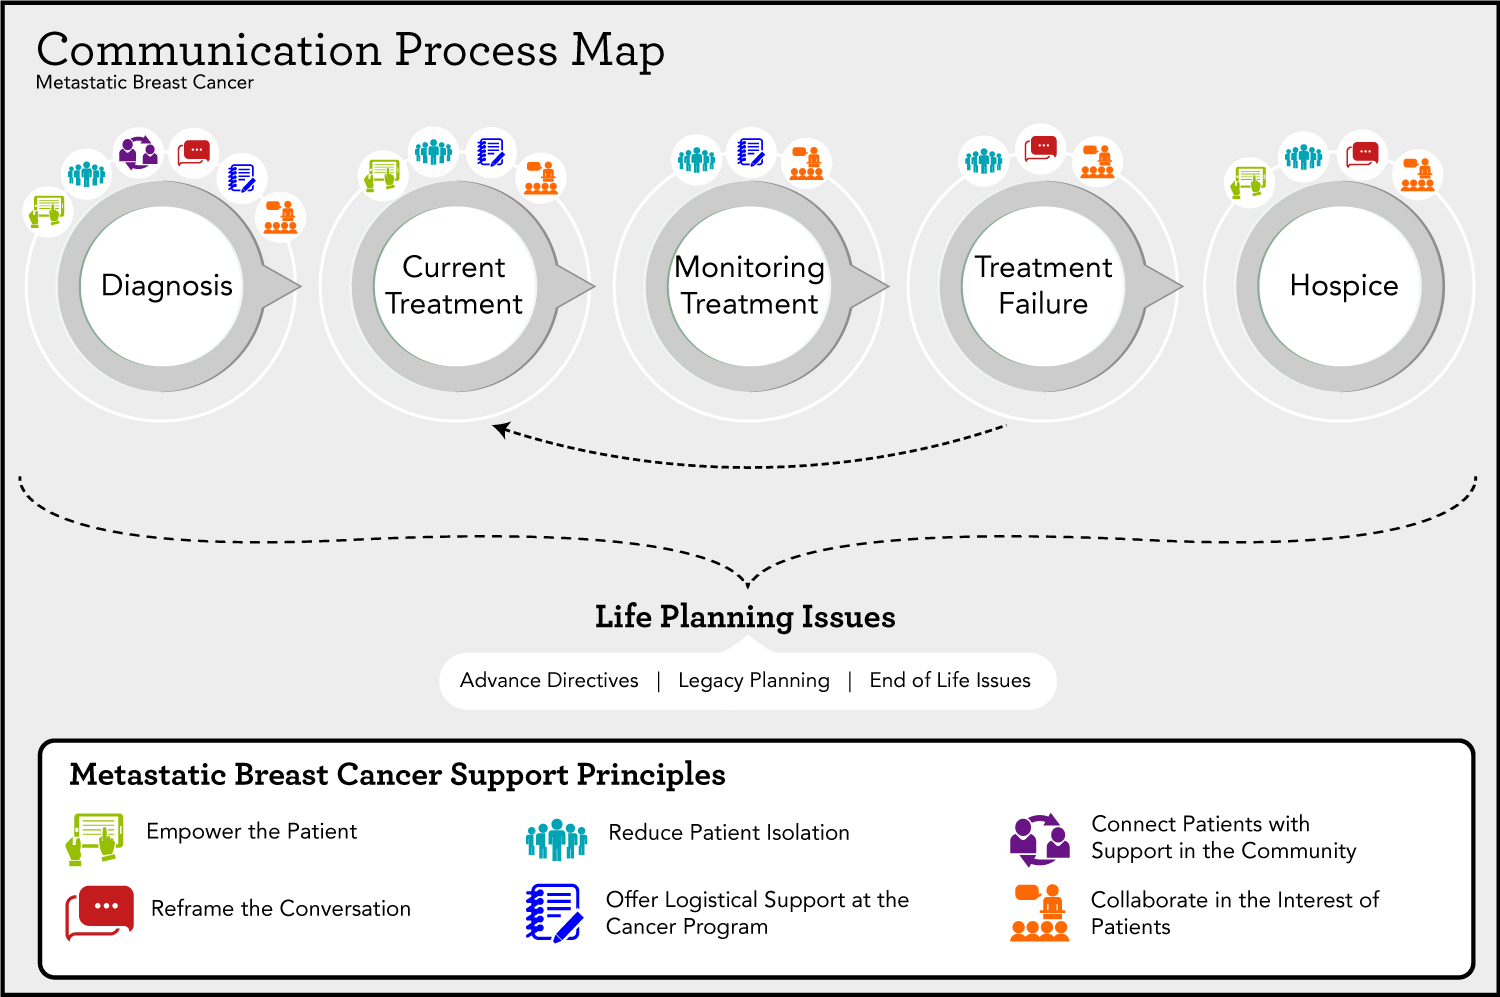 MBC Communications Process Map